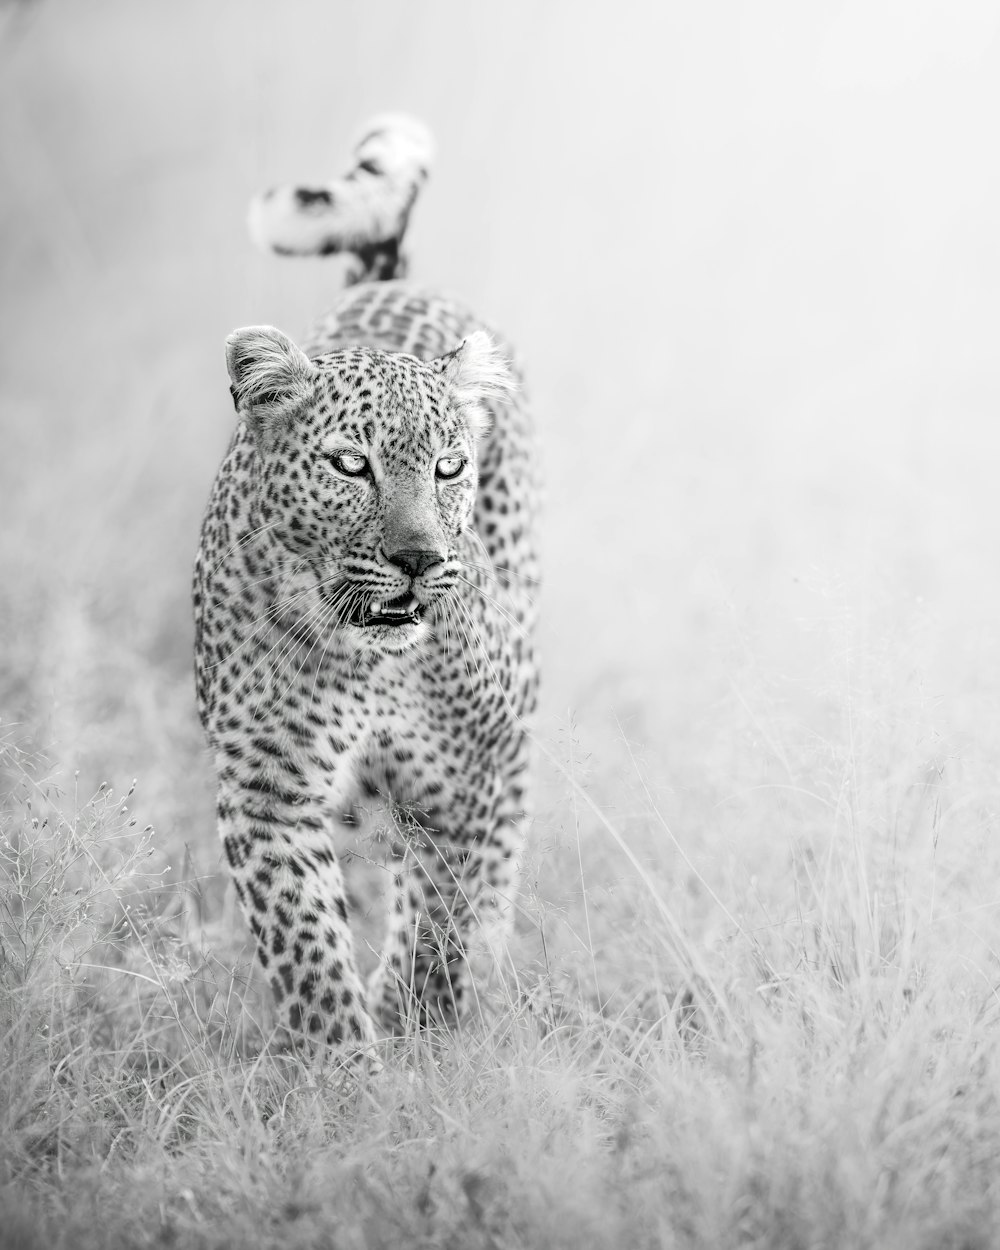 a leopard standing on a dry grass field